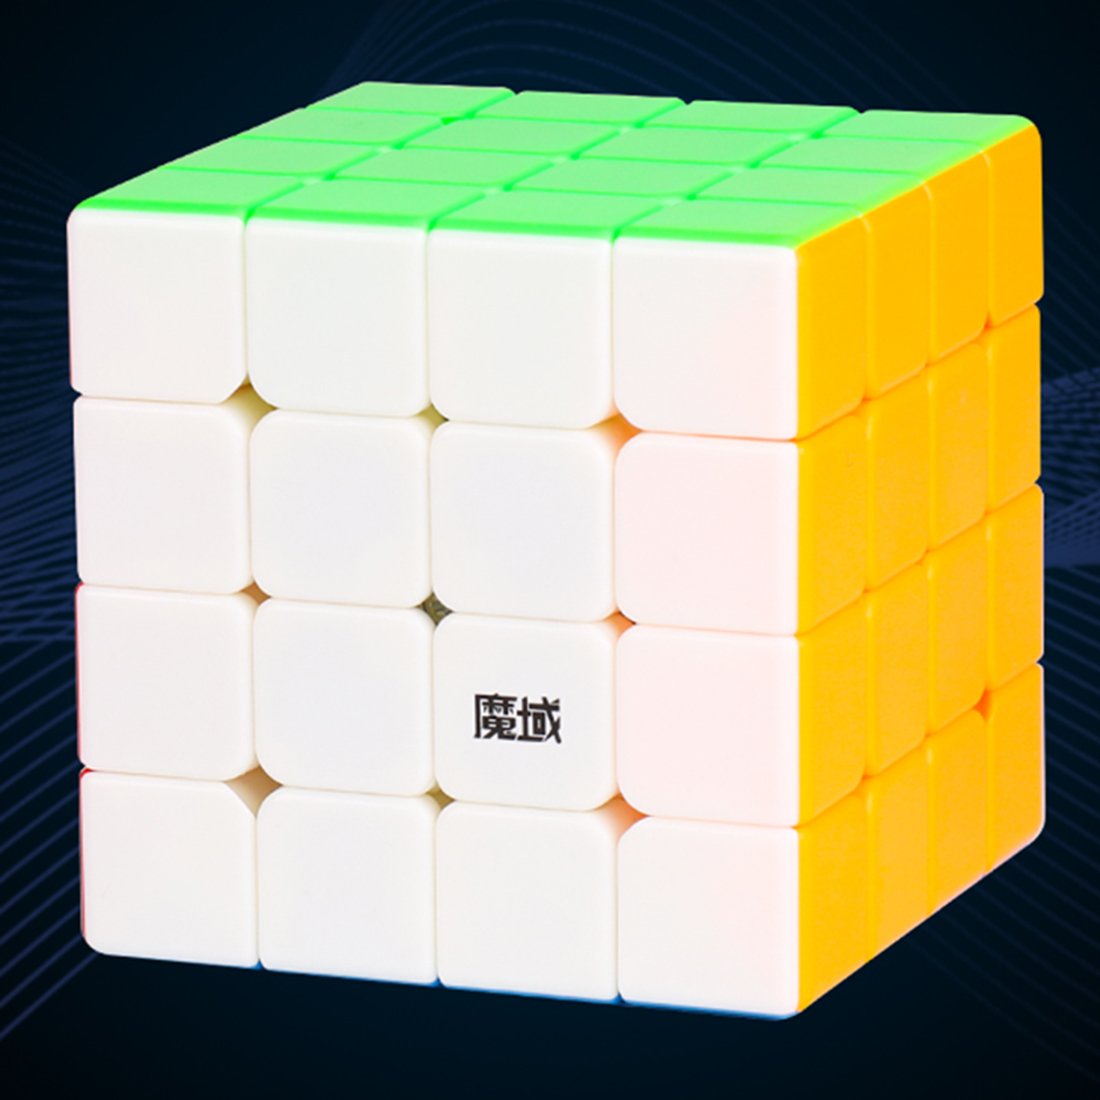 Yj8267 Moyu Aosu Gts2 Magic Cube 4X4